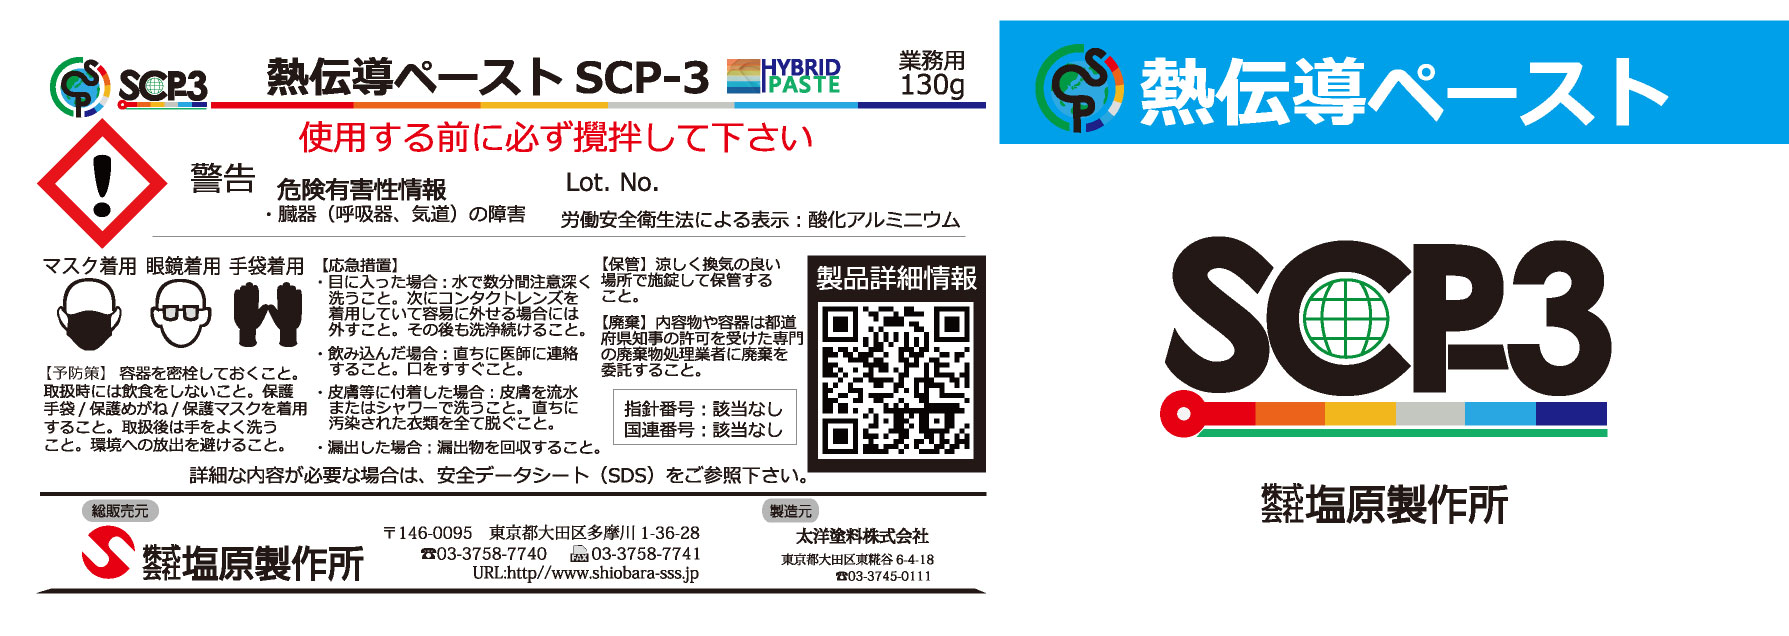 SPC-3ラベルデータ8月31日